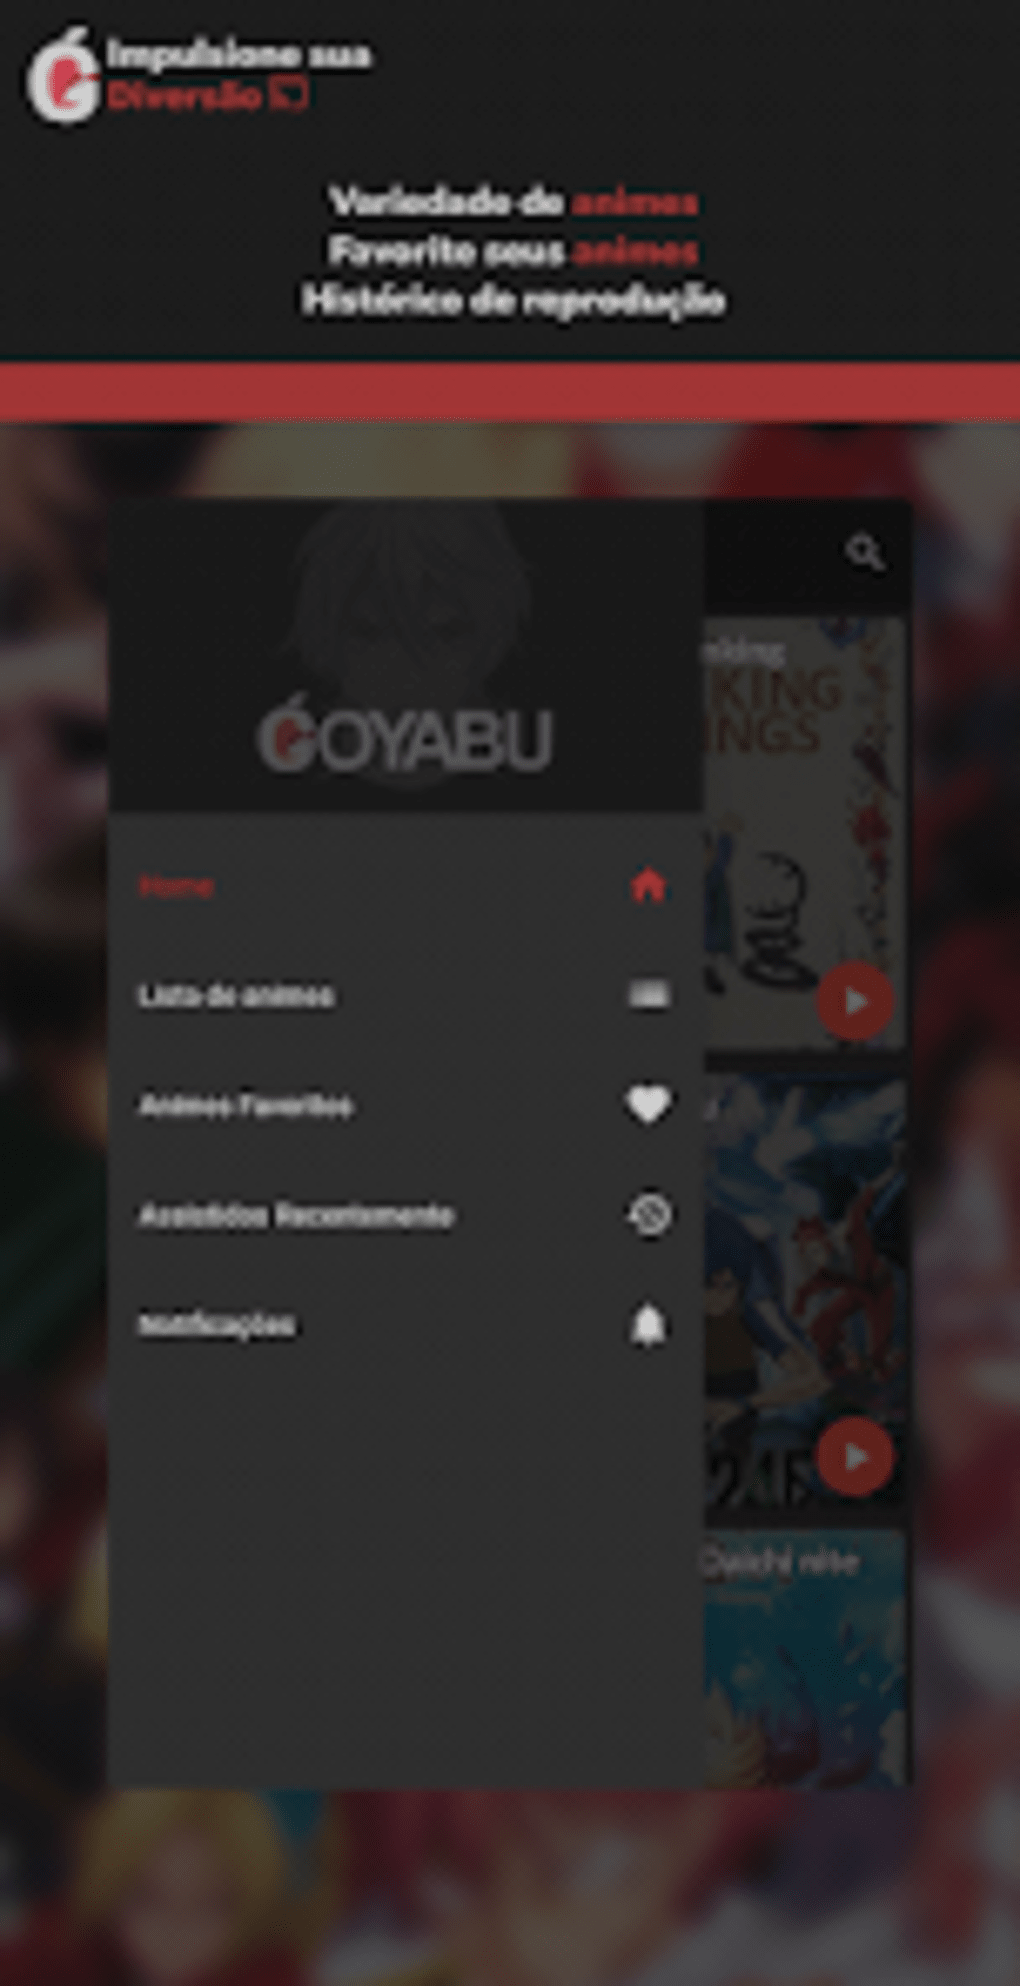 Goyabu Animes Online para Android - Download